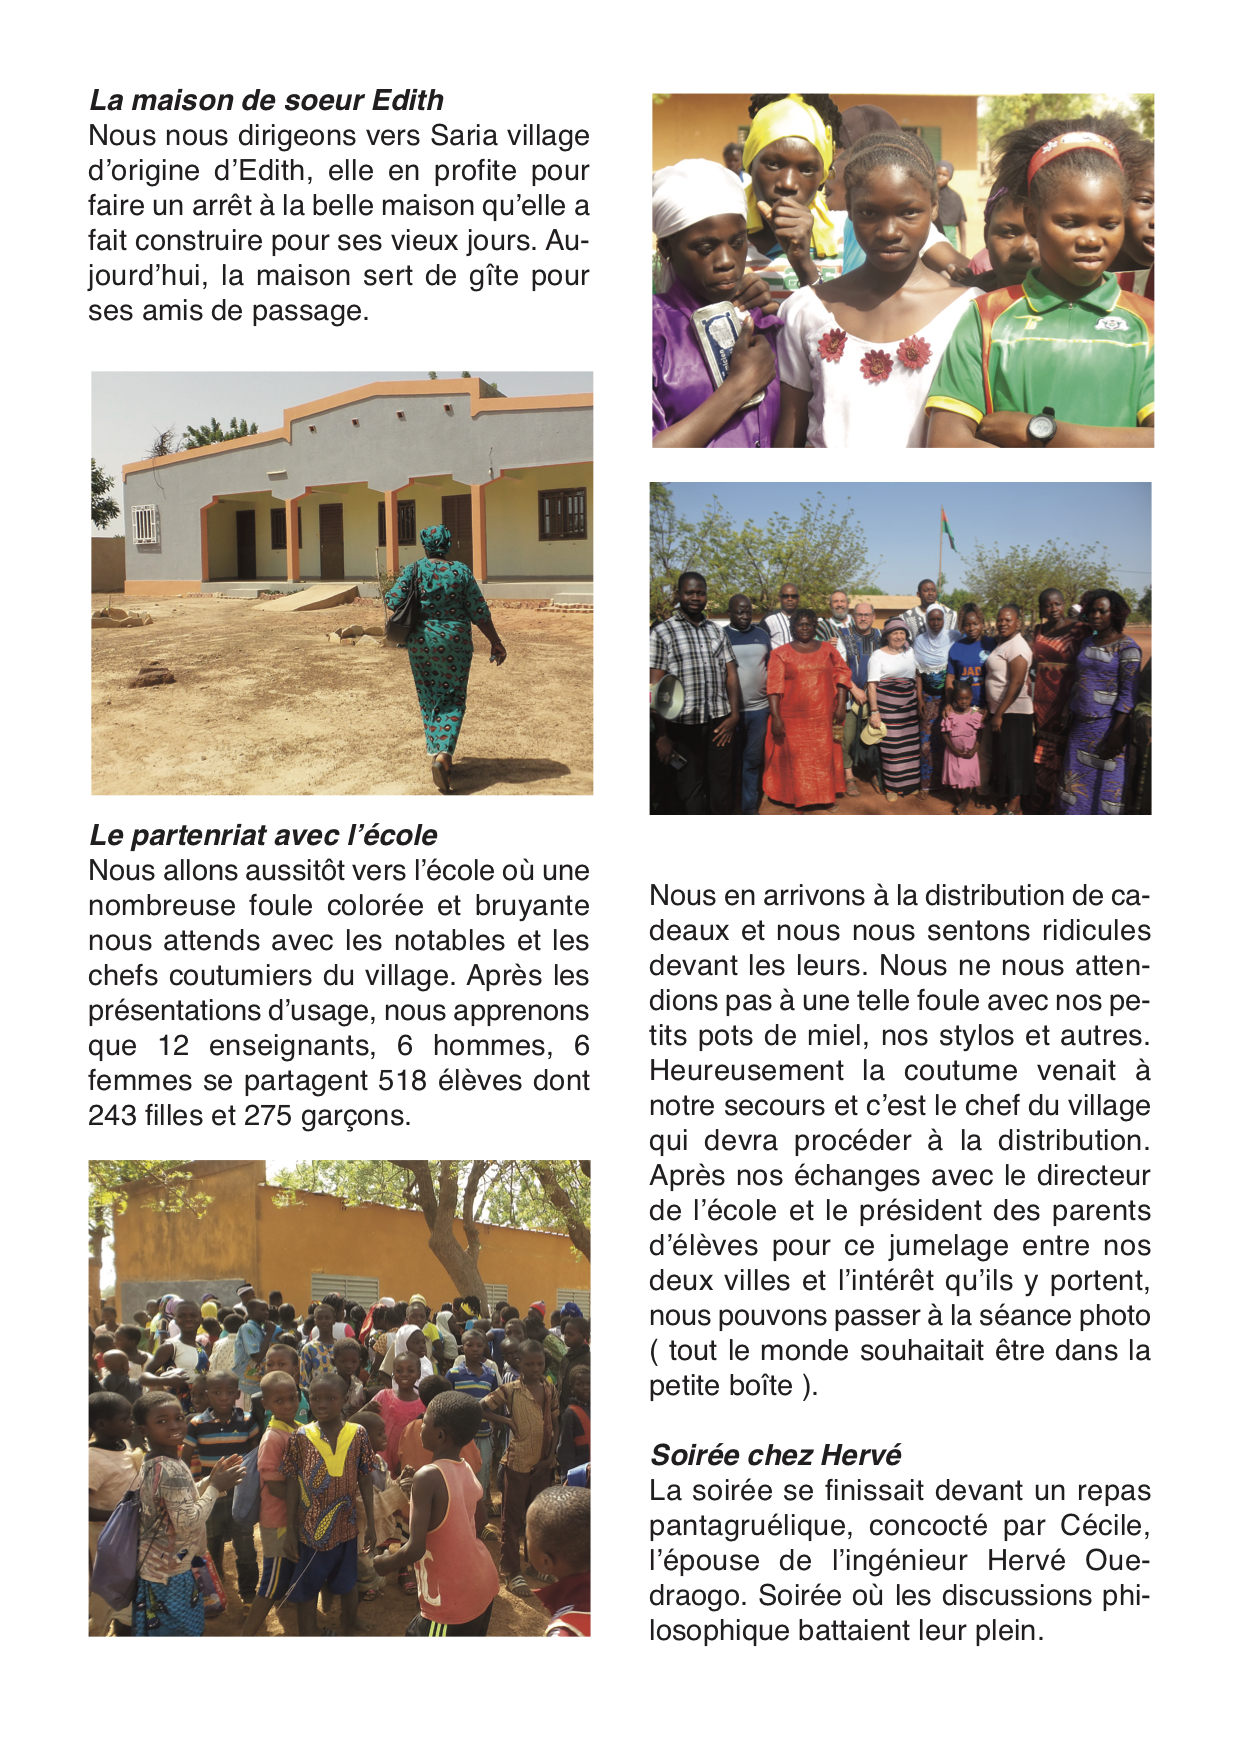 Journal de voyage au Burkina Faso - Dimanche 6 au lundi 7 mars 2022 - page 4